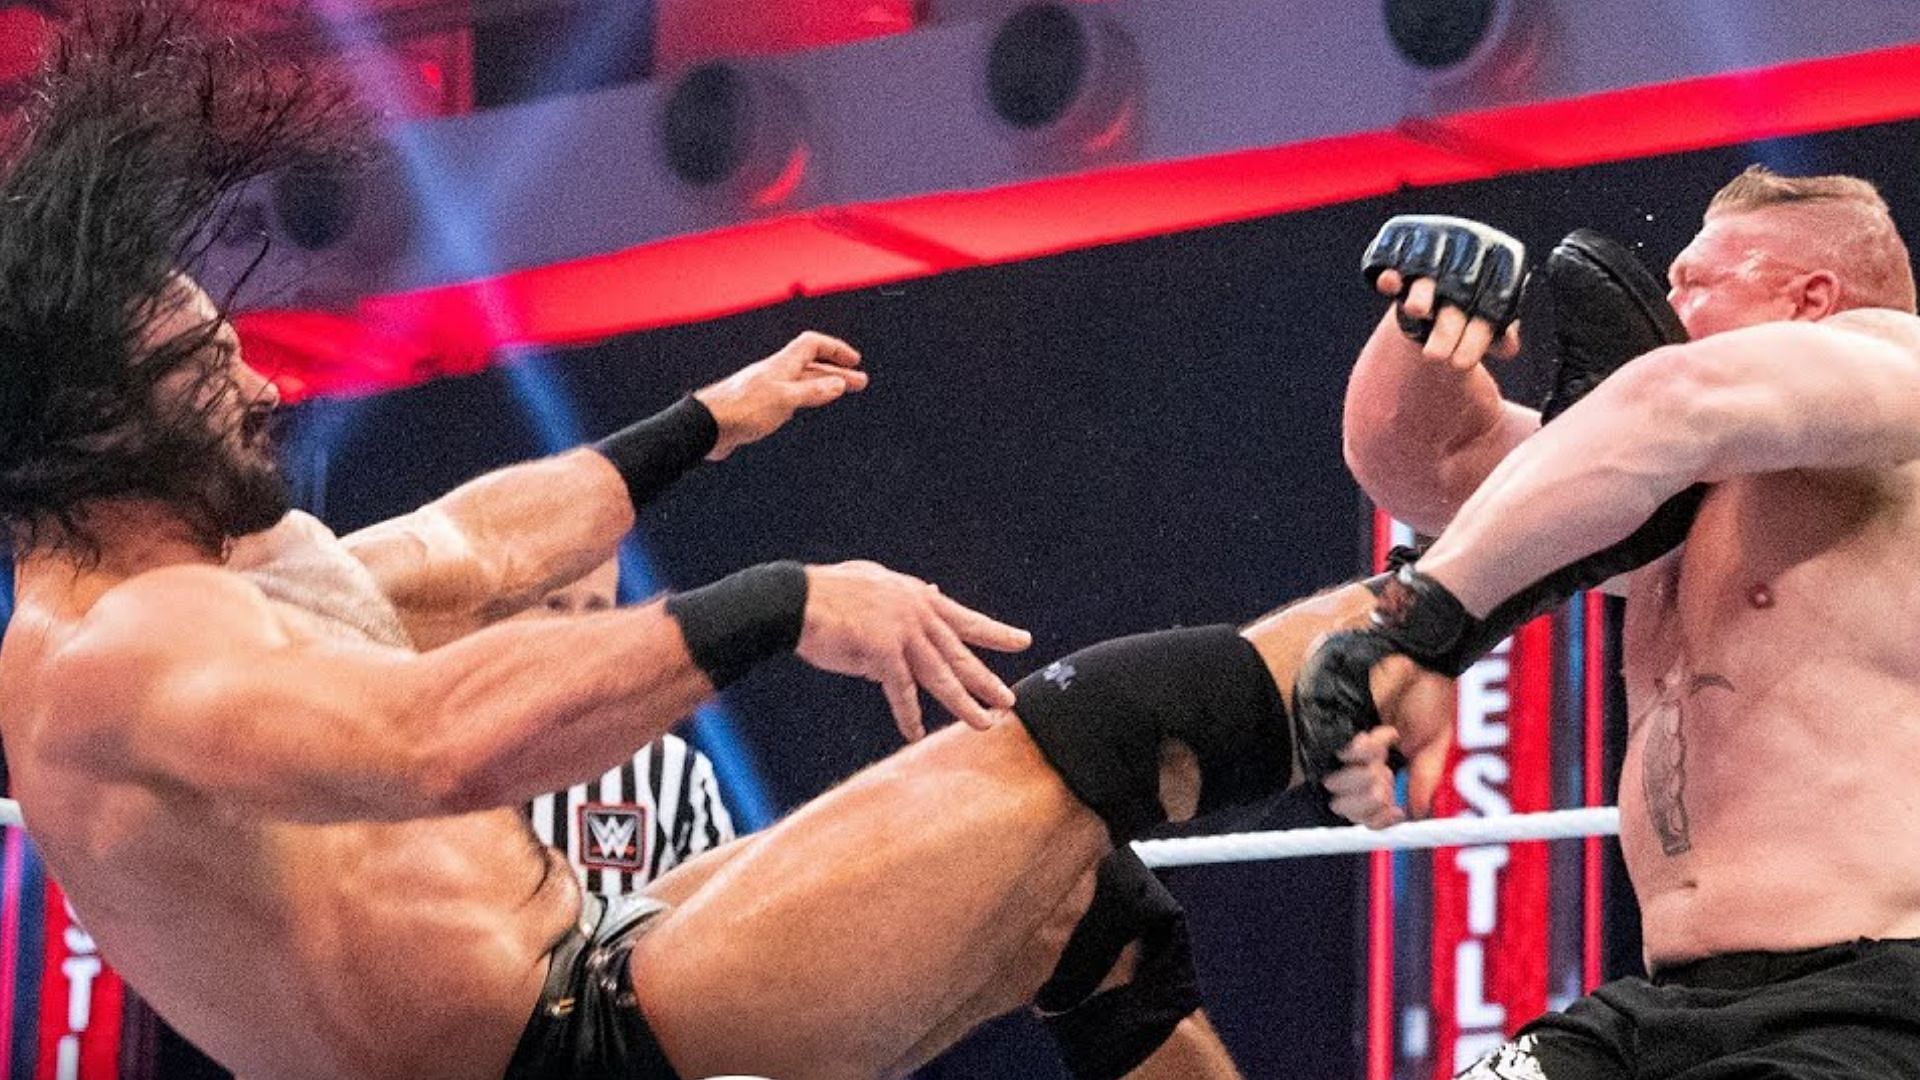 Scene from Drew McIntyre vs. Brock Lesnar for the WWE Championship at WrestleMania 36